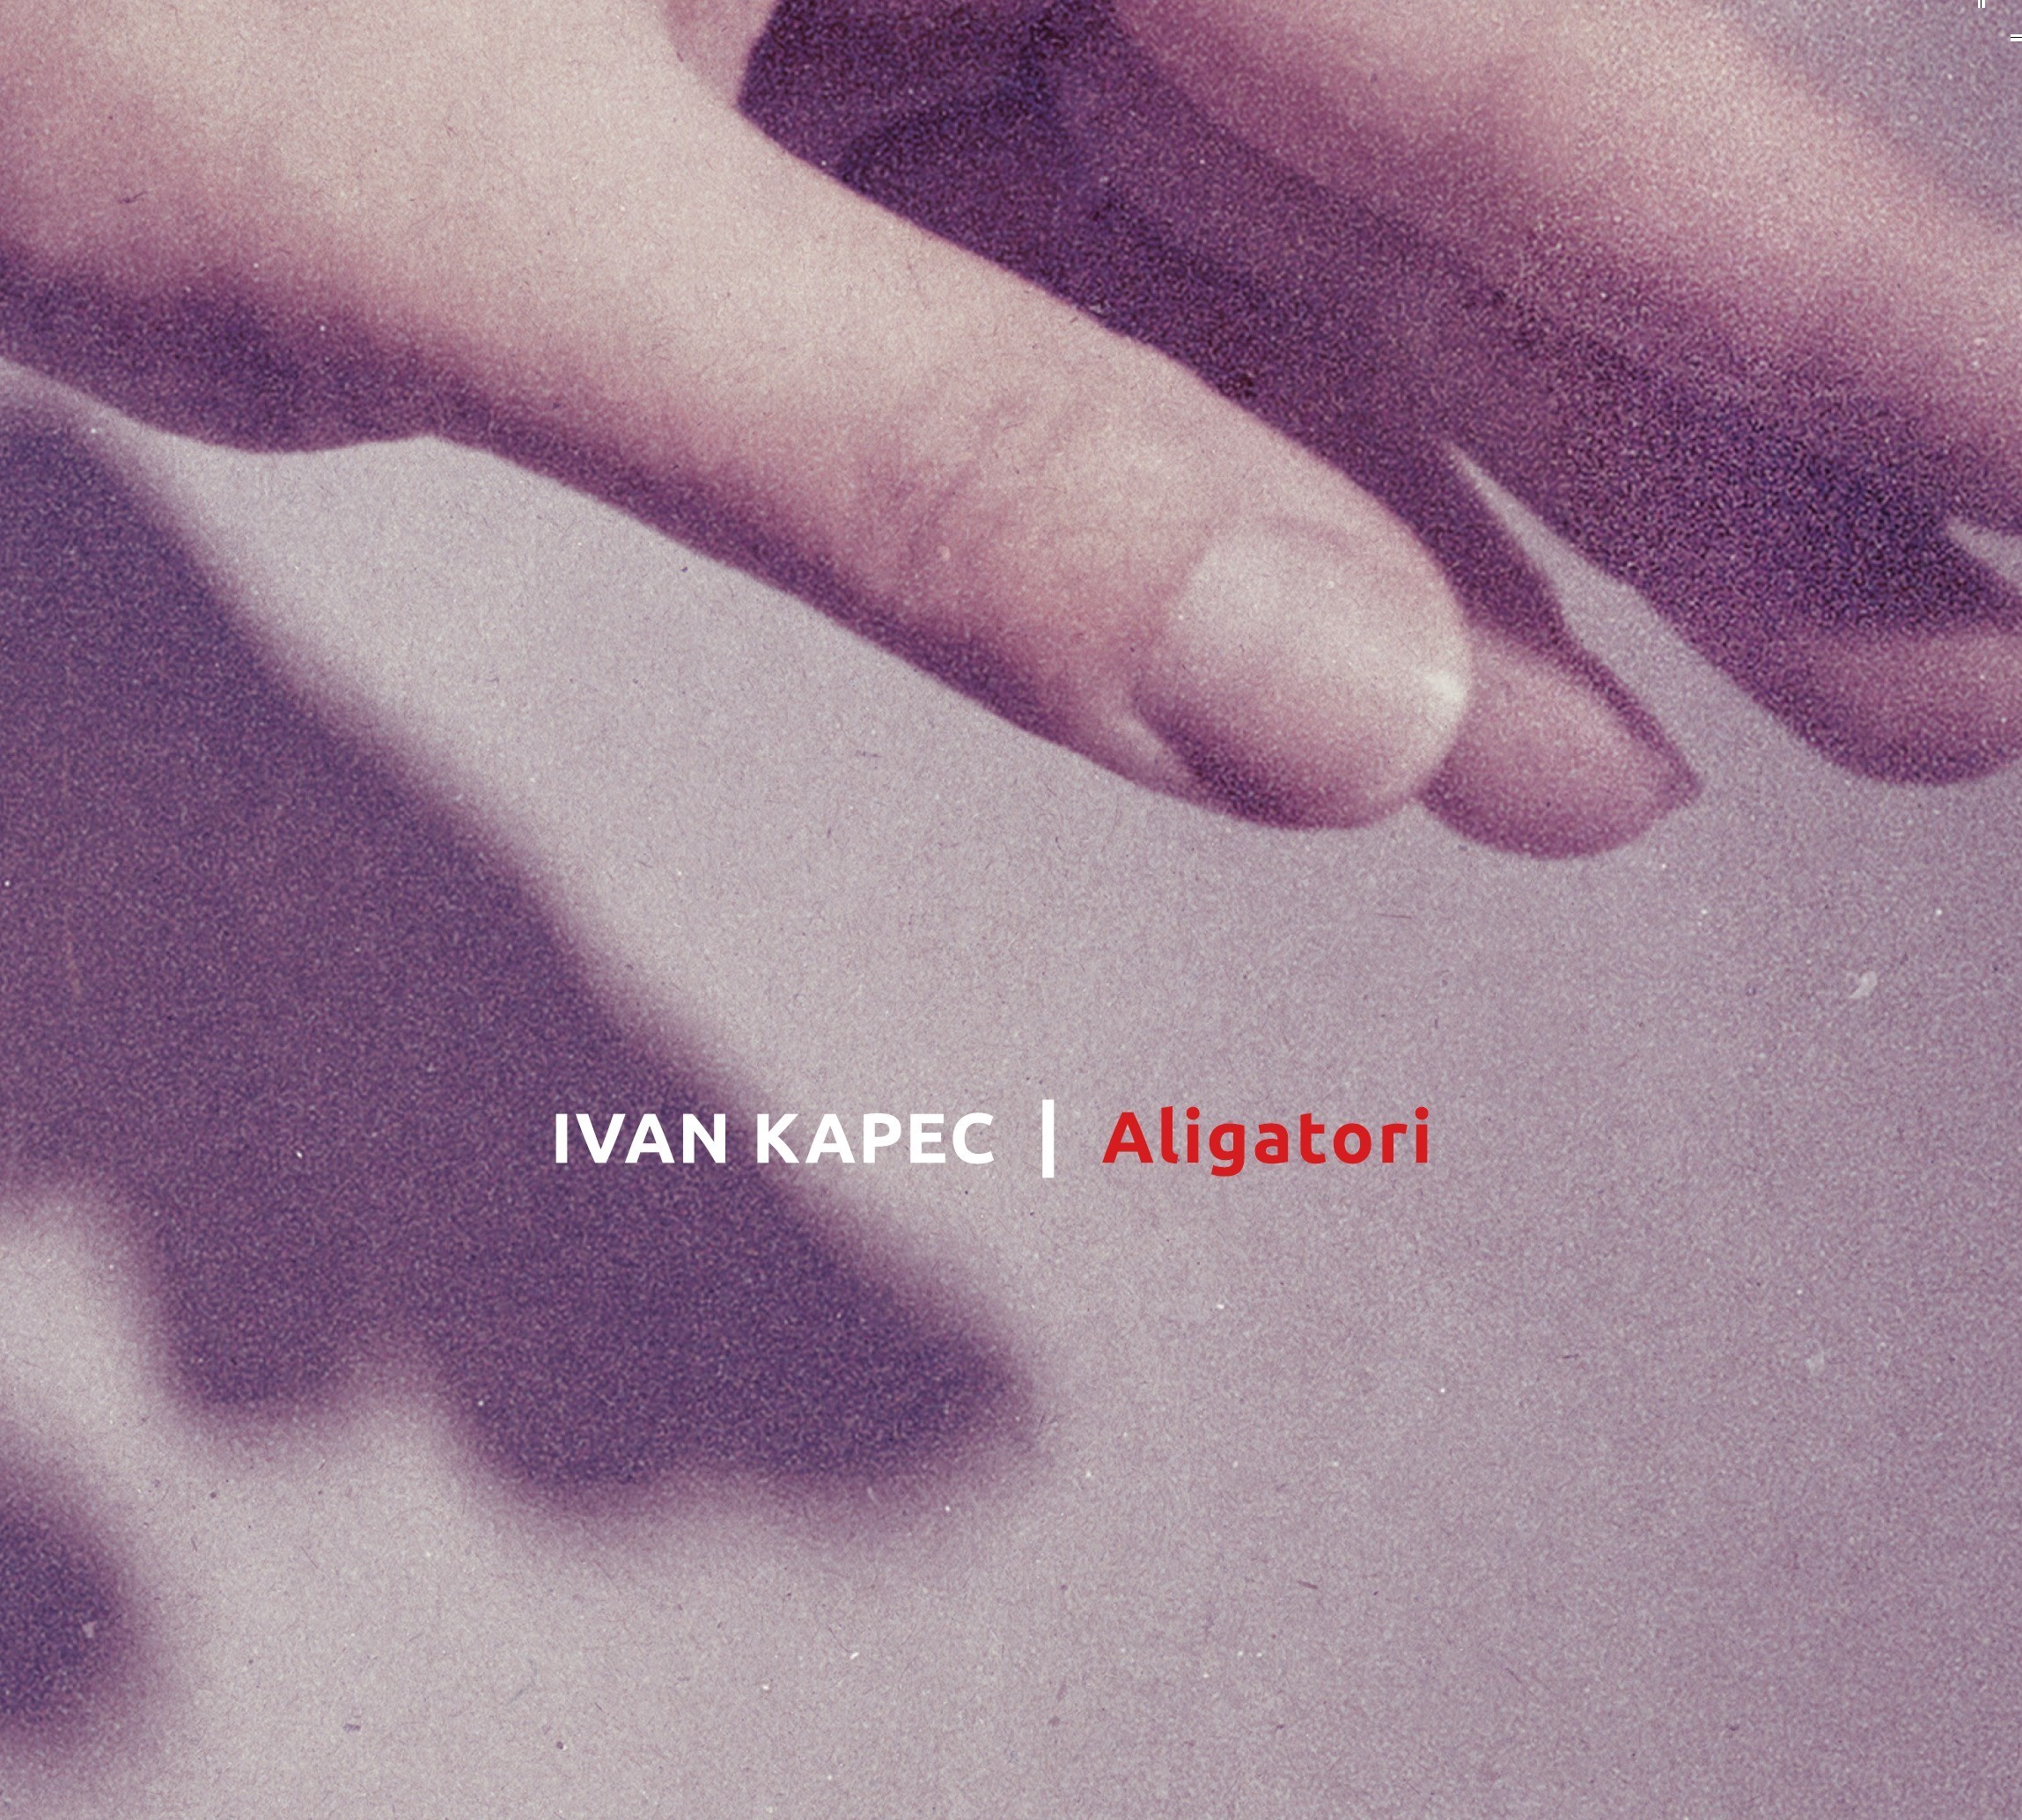 Jazz glazbenik Ivan Kapec objavio prvi indie pop kantautorski album